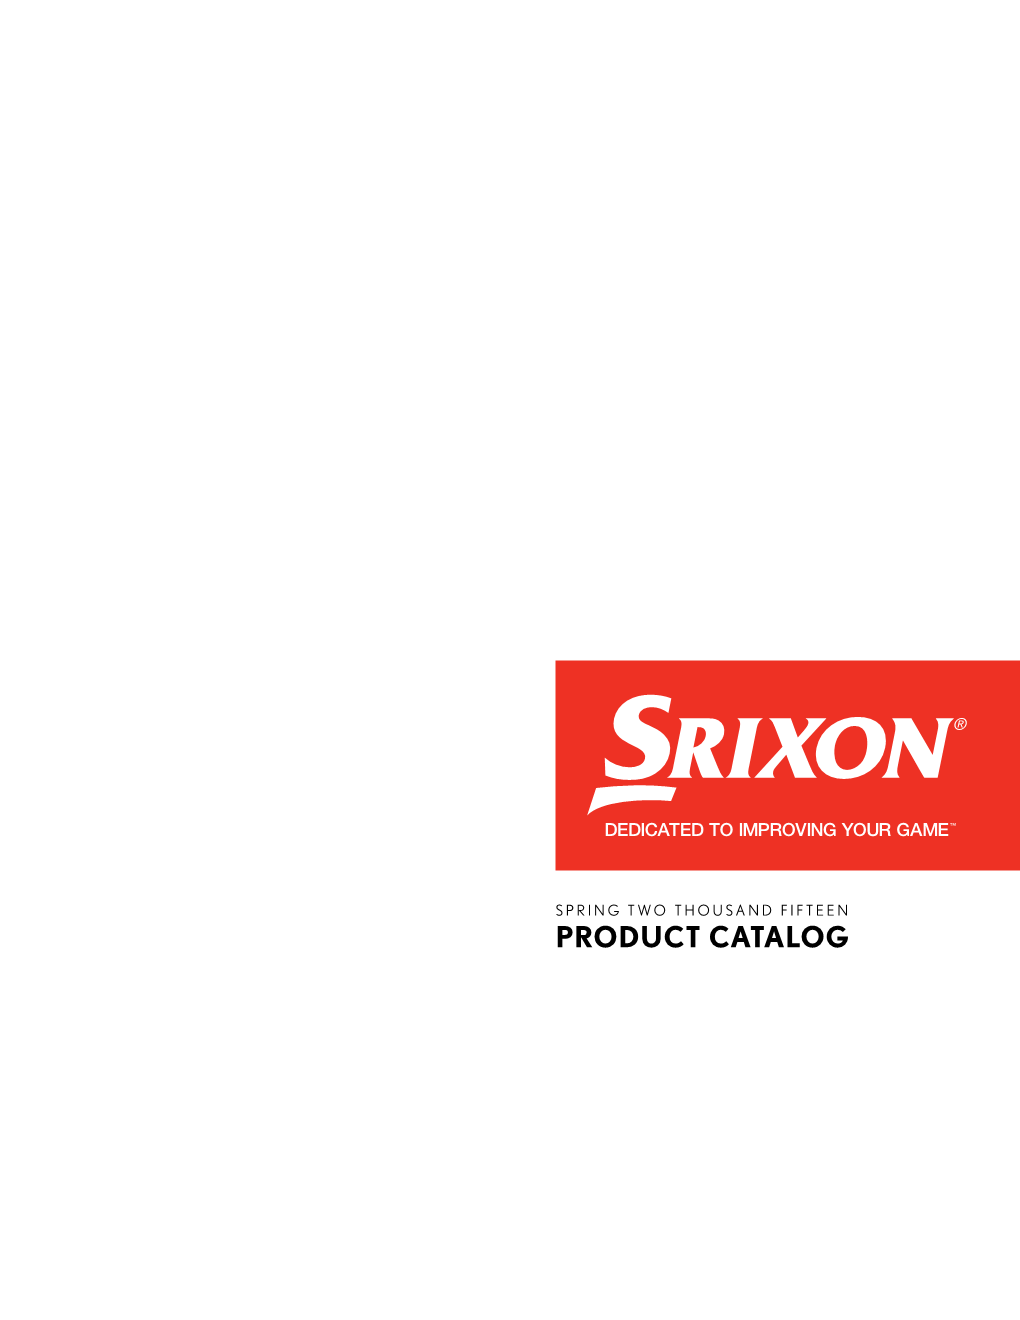 2015 Srixon Catalog